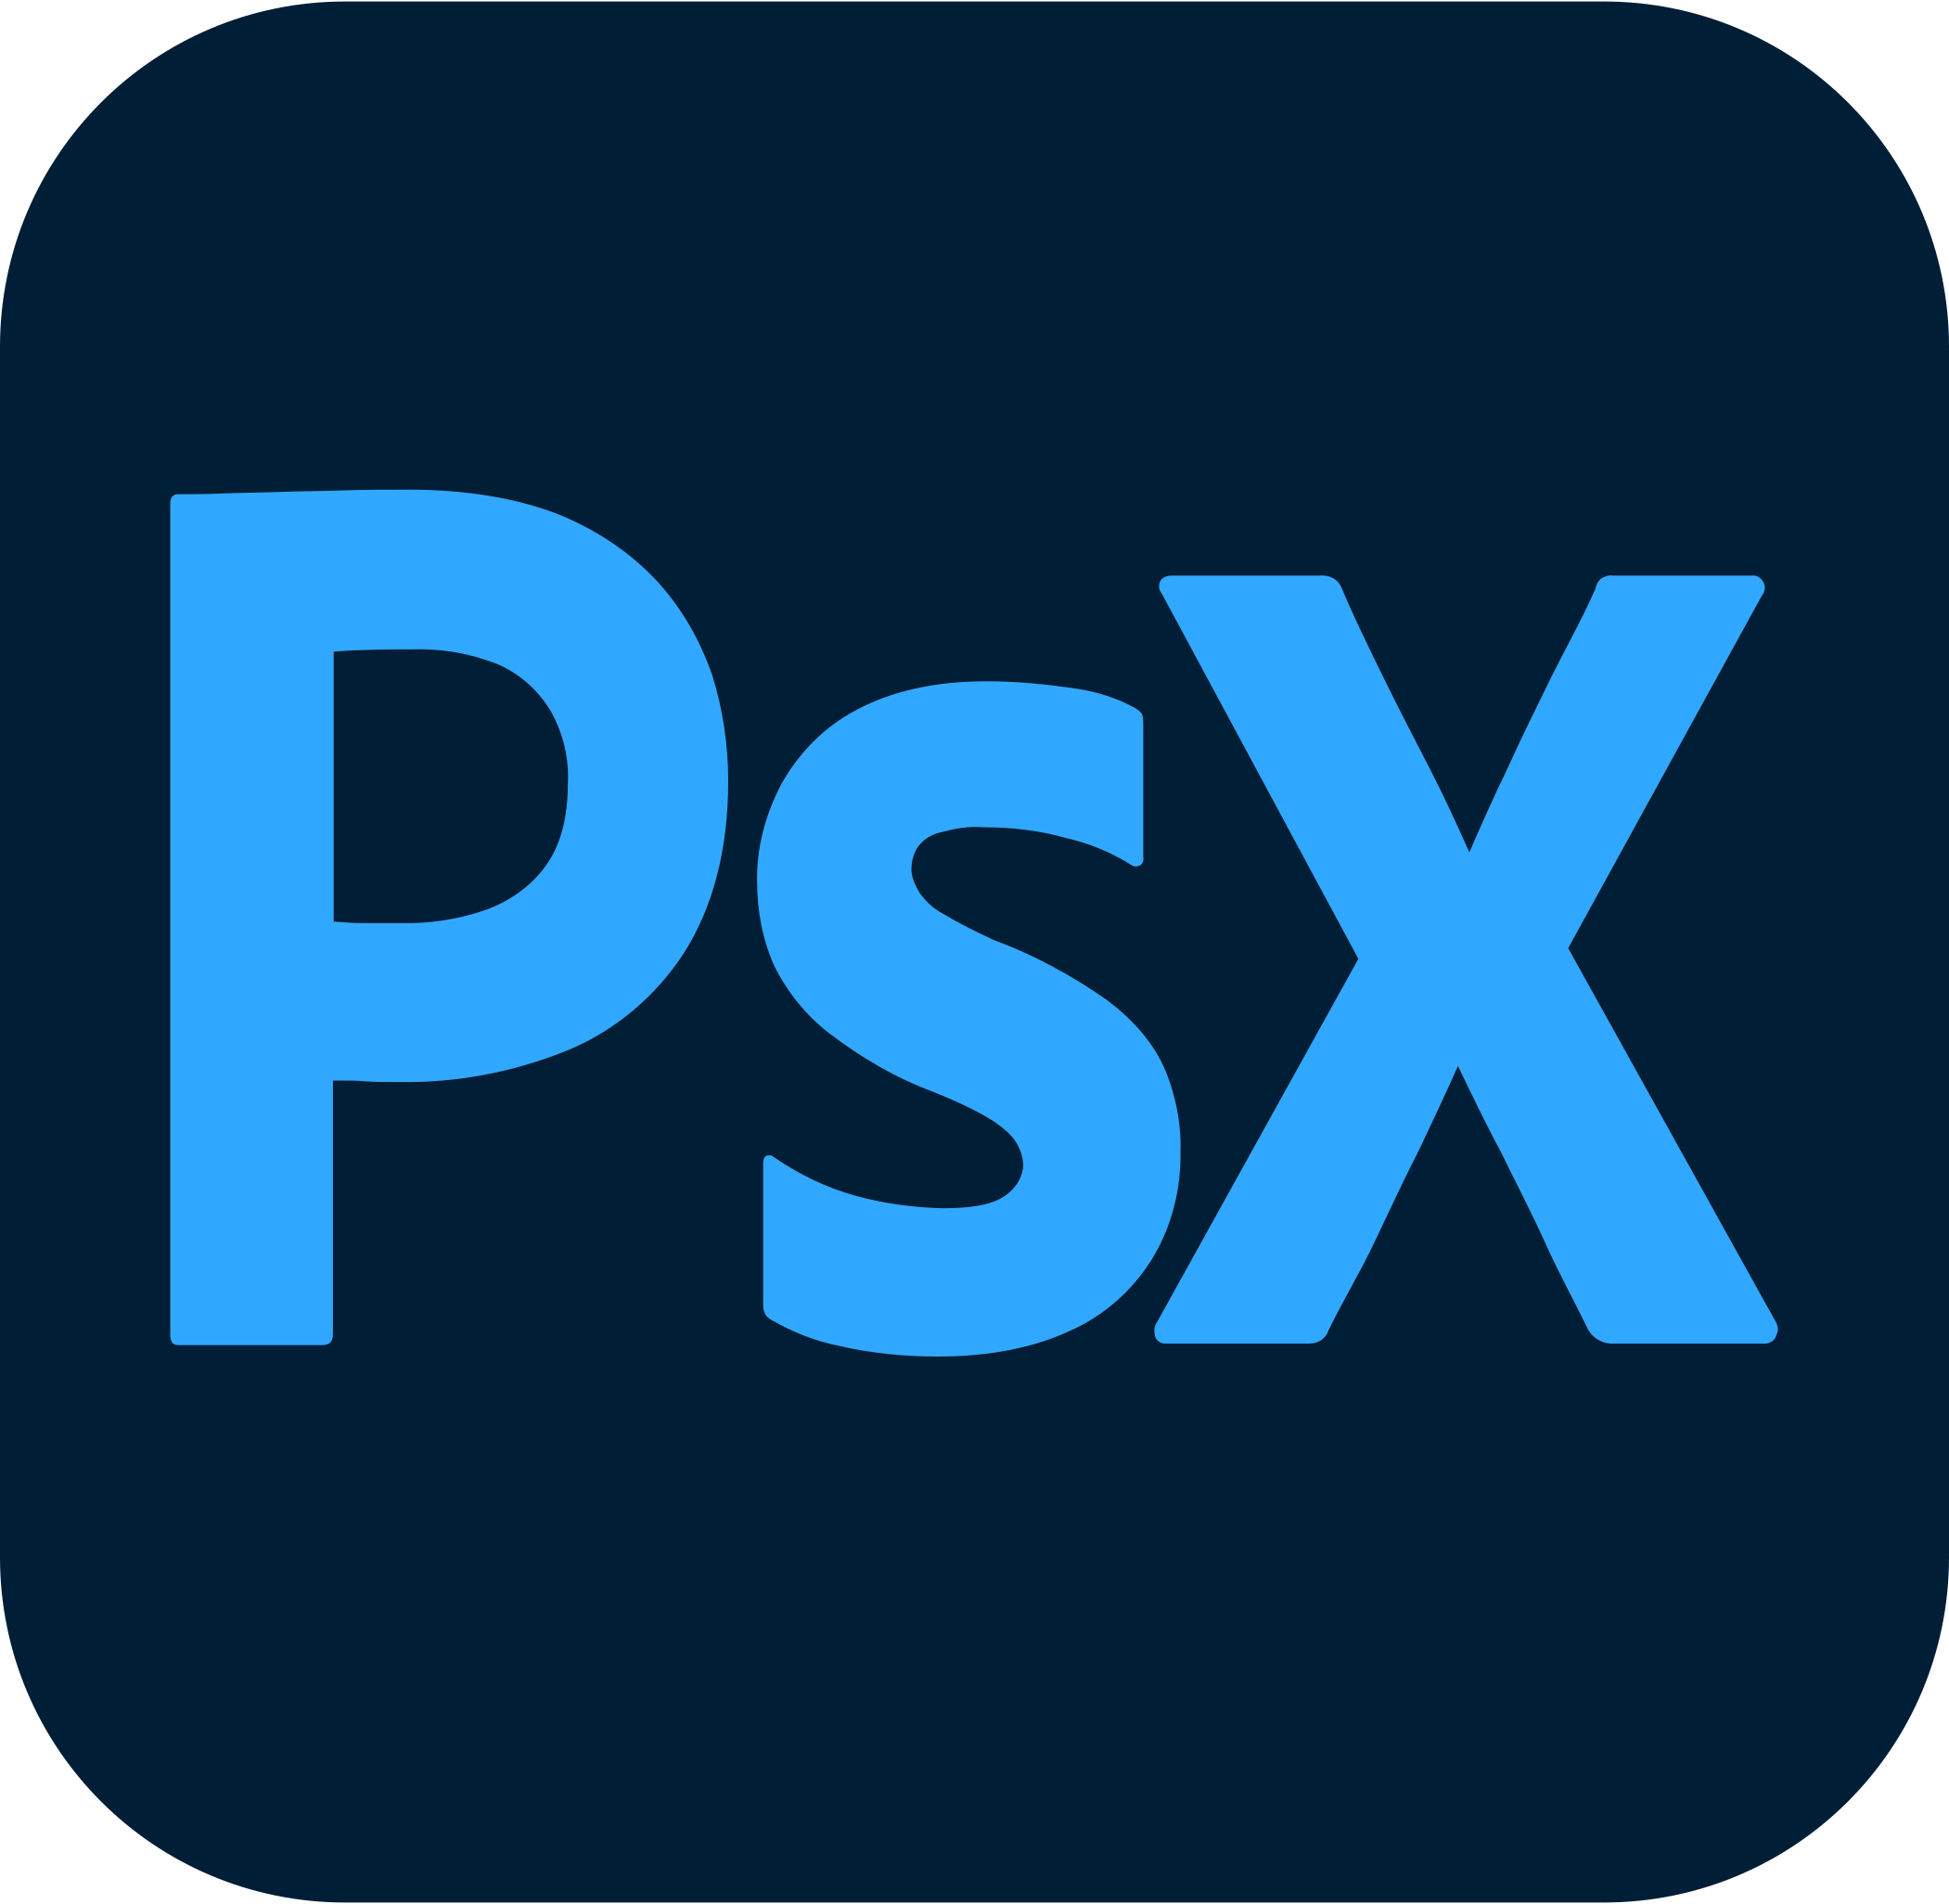 File:Adobe Photoshop Express logo (2020).svg - Wikimedia Commons